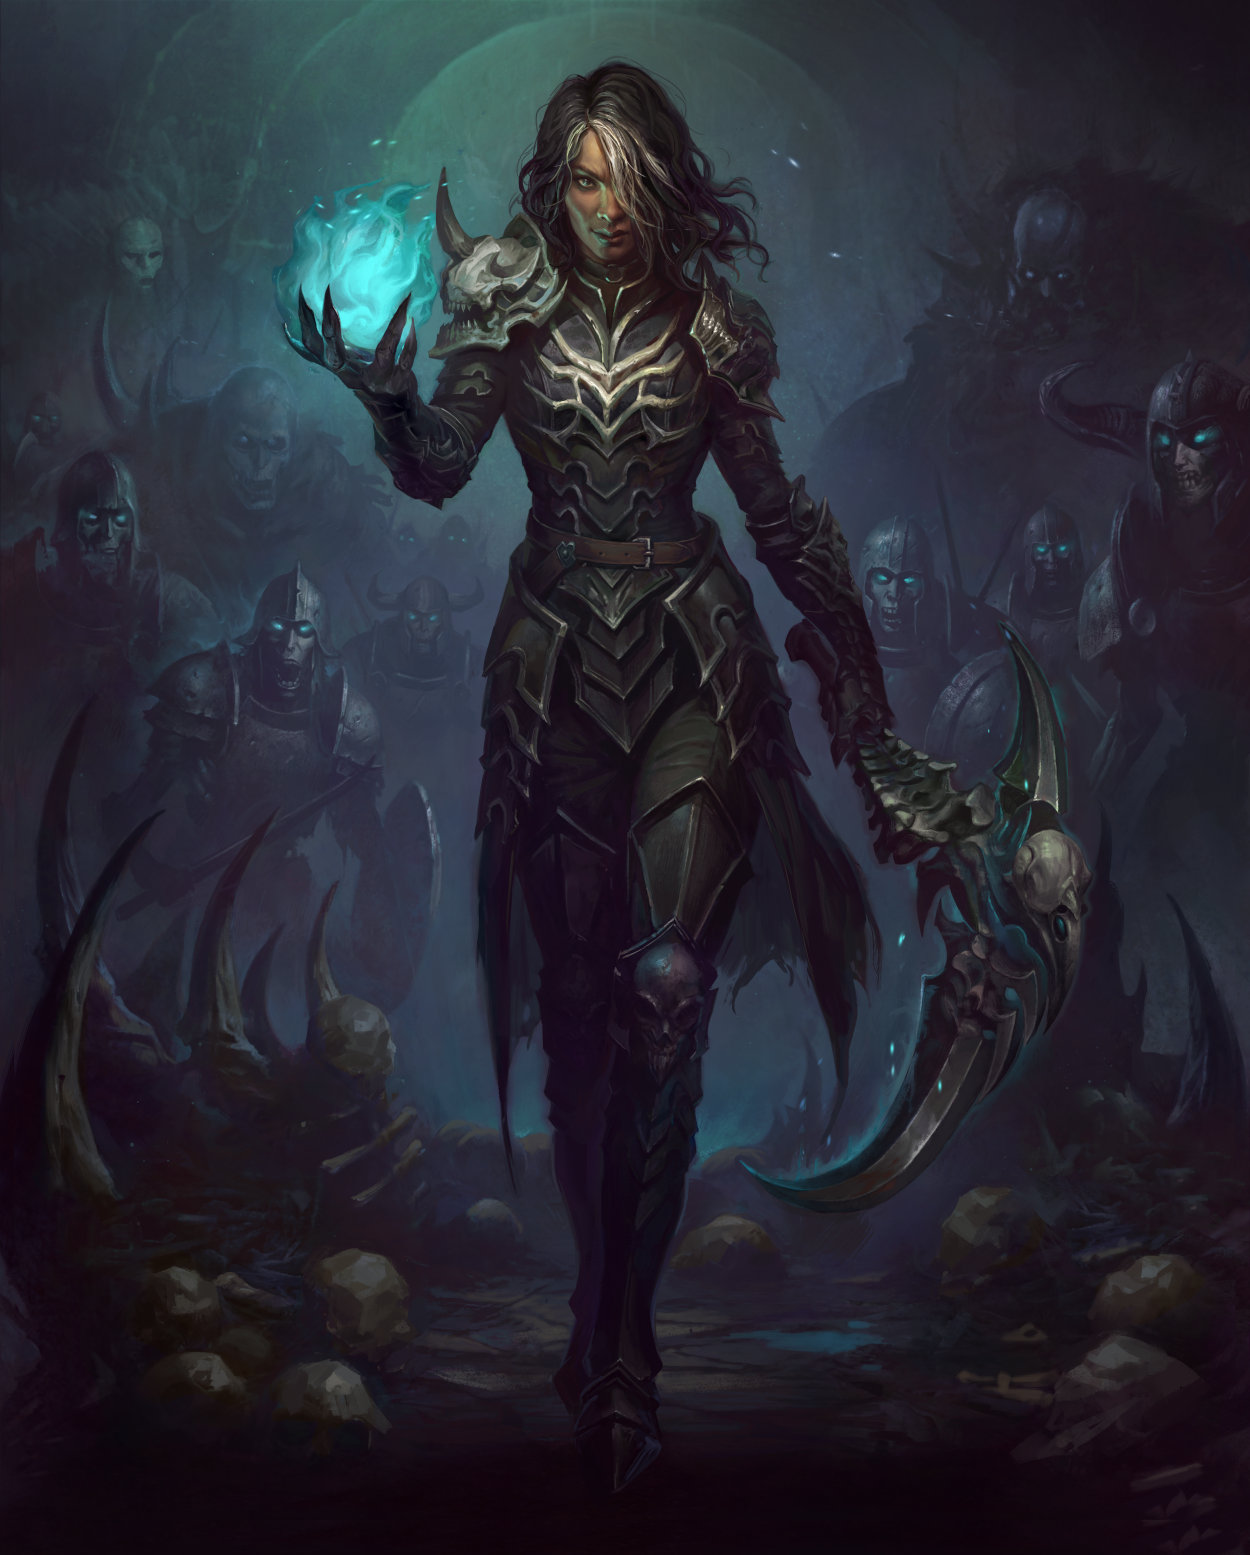 Demon Hunter PVE Build for Season 14 in Diablo Immortal